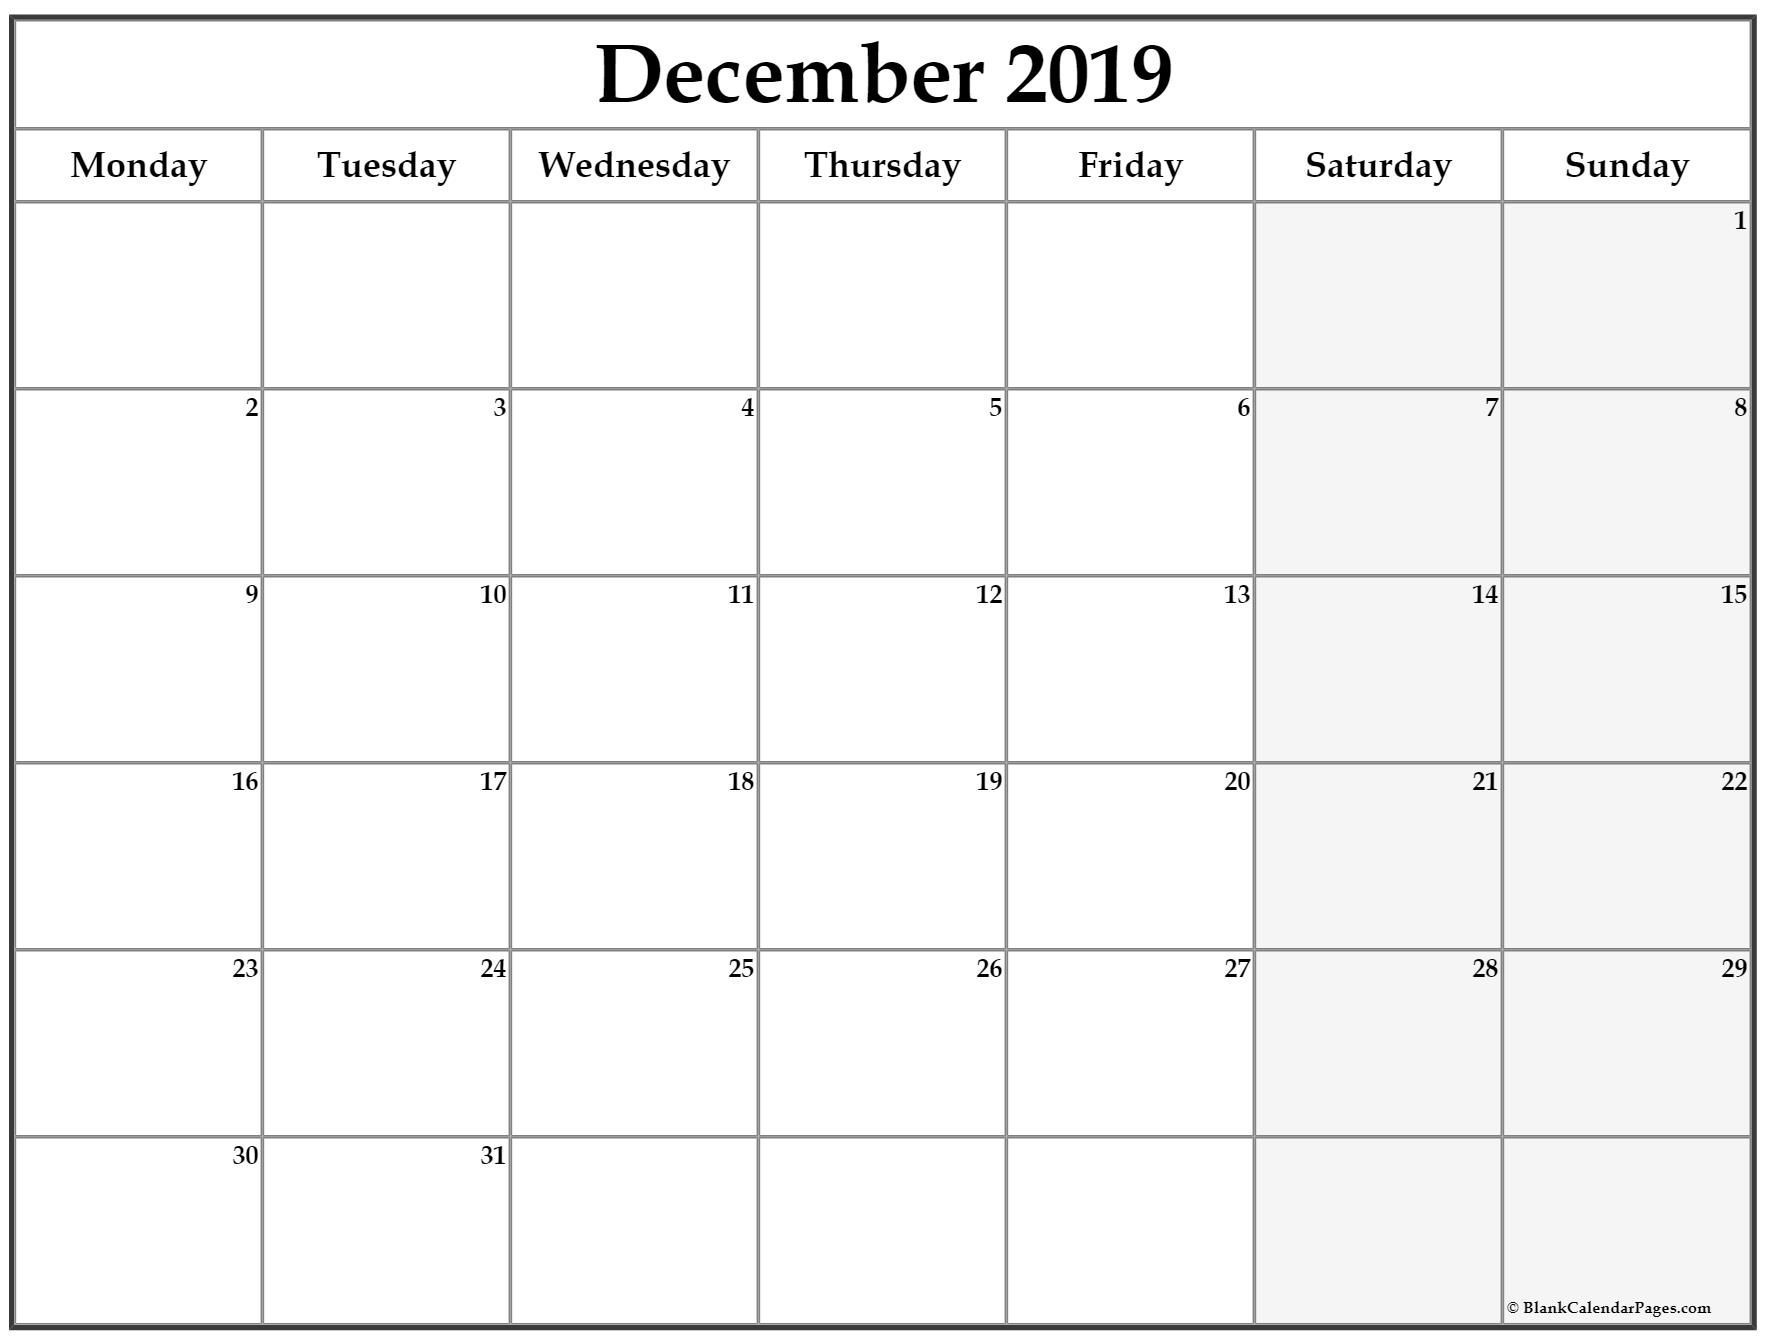 Exceptional Blank Calendar Starting On Monday | Calendar